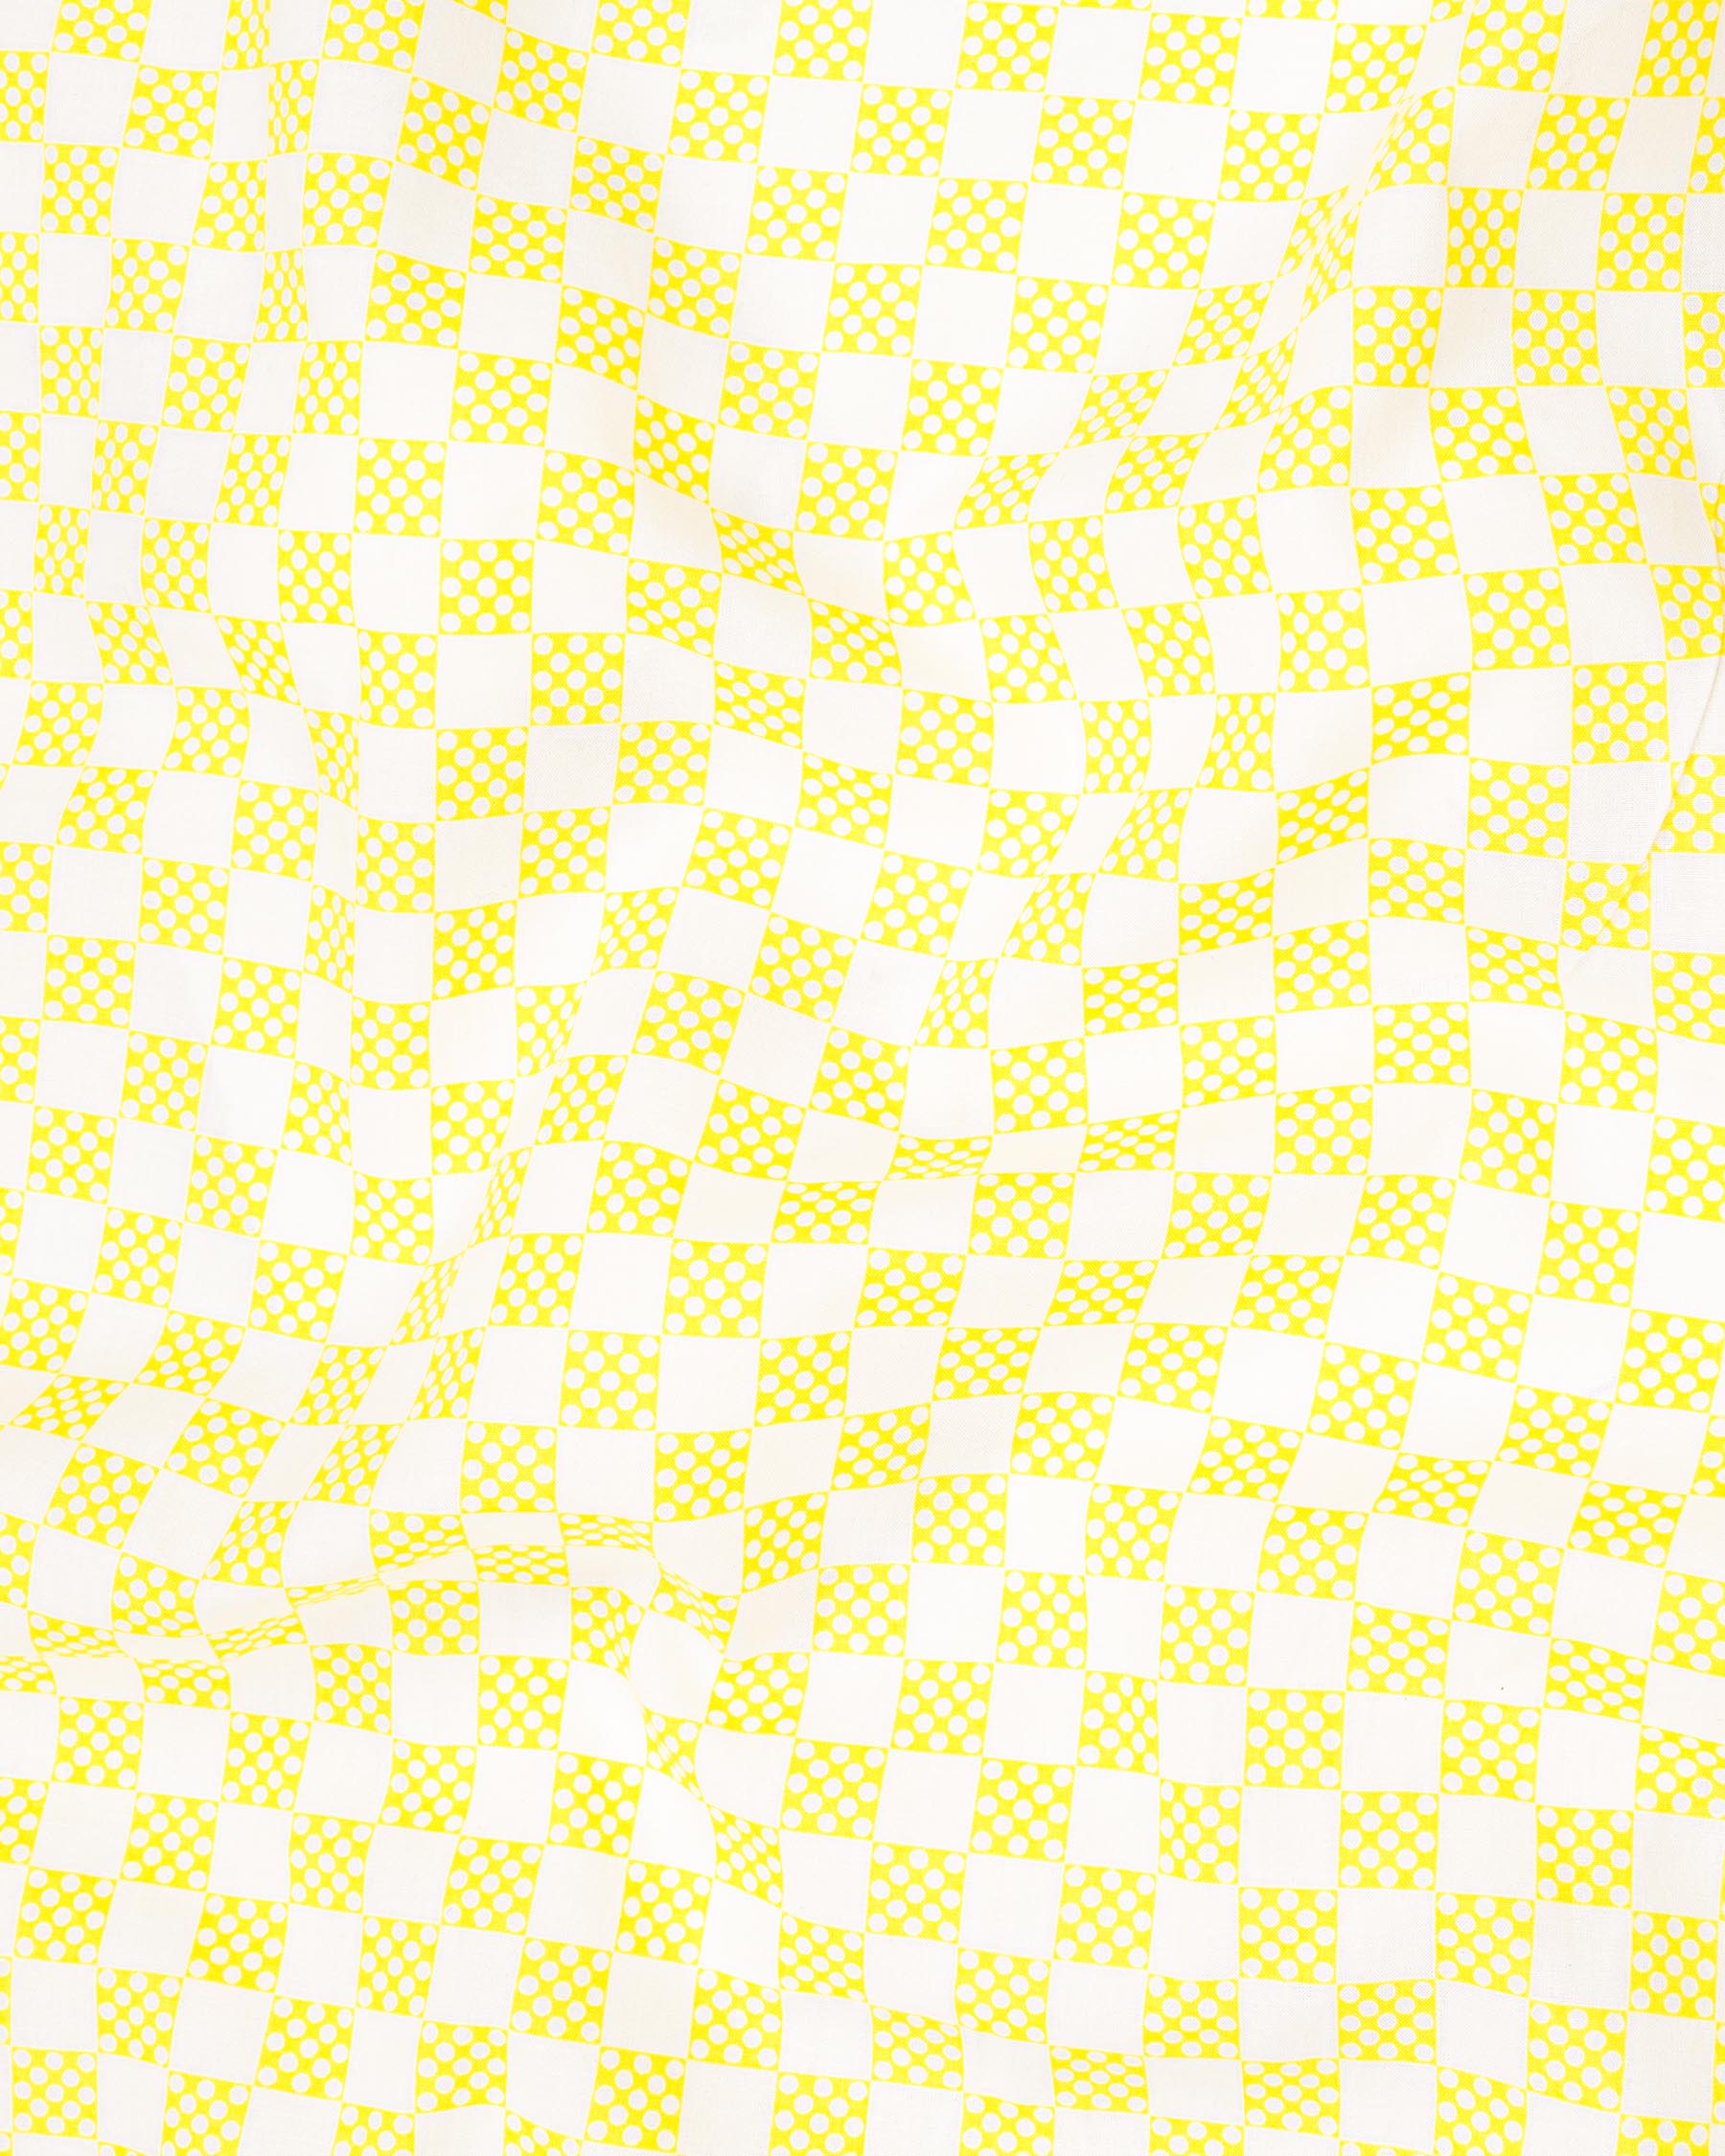 Custard Yellow with Bright White Square Printed Premium Cotton Kurta Shirt 6967-KS-38,6967-KS-H-38,6967-KS-39,6967-KS-H-39,6967-KS-40,6967-KS-H-40,6967-KS-42,6967-KS-H-42,6967-KS-44,6967-KS-H-44,6967-KS-46,6967-KS-H-46,6967-KS-48,6967-KS-H-48,6967-KS-50,6967-KS-H-50,6967-KS-52,6967-KS-H-52